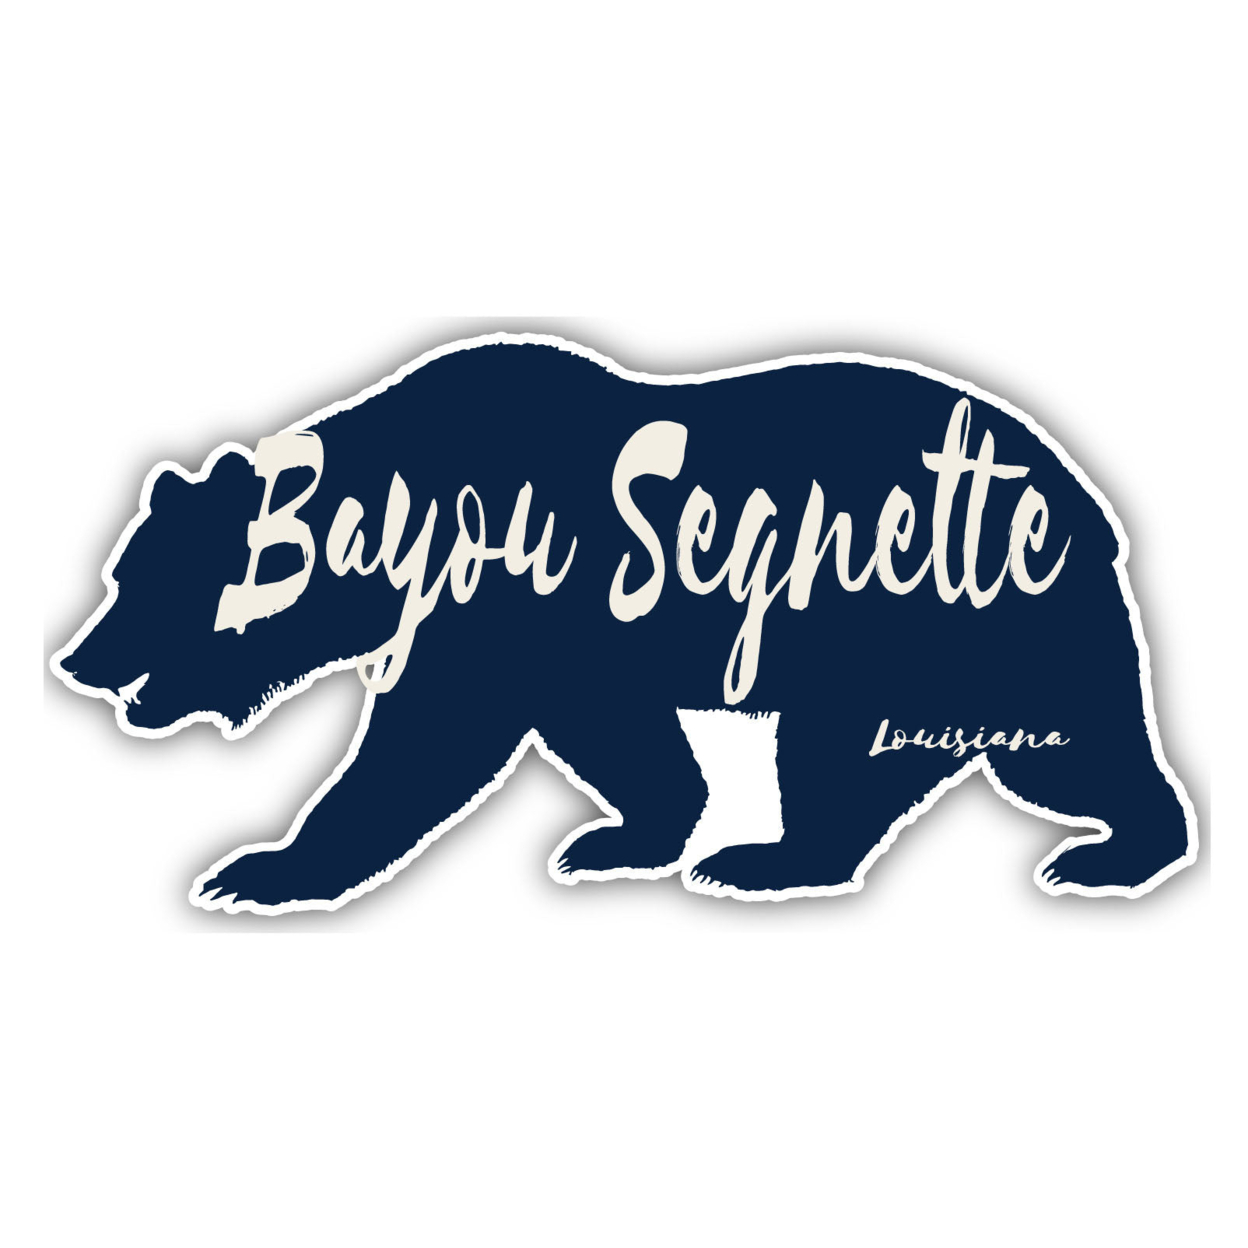 Bayou Segnette Louisiana Souvenir Decorative Stickers (Choose Theme And Size) - 4-Pack, 12-Inch, Bear